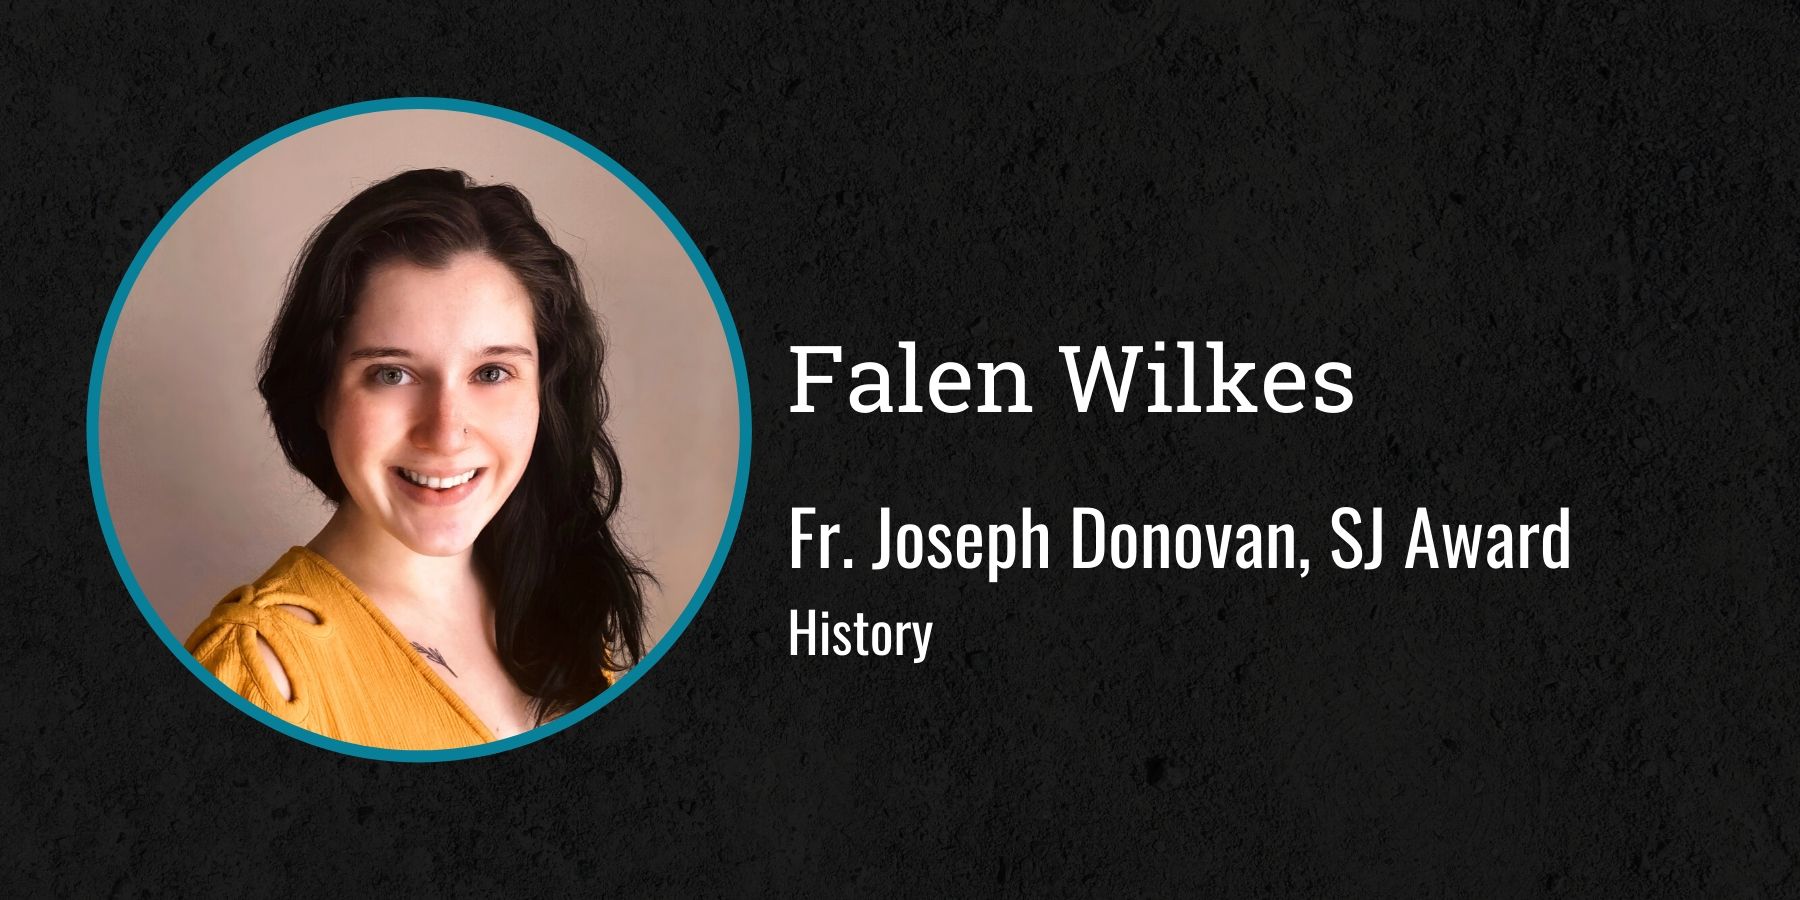 Photo of Falen Wilkes and text Fr. Joseph Donovan, S.J. Award, History